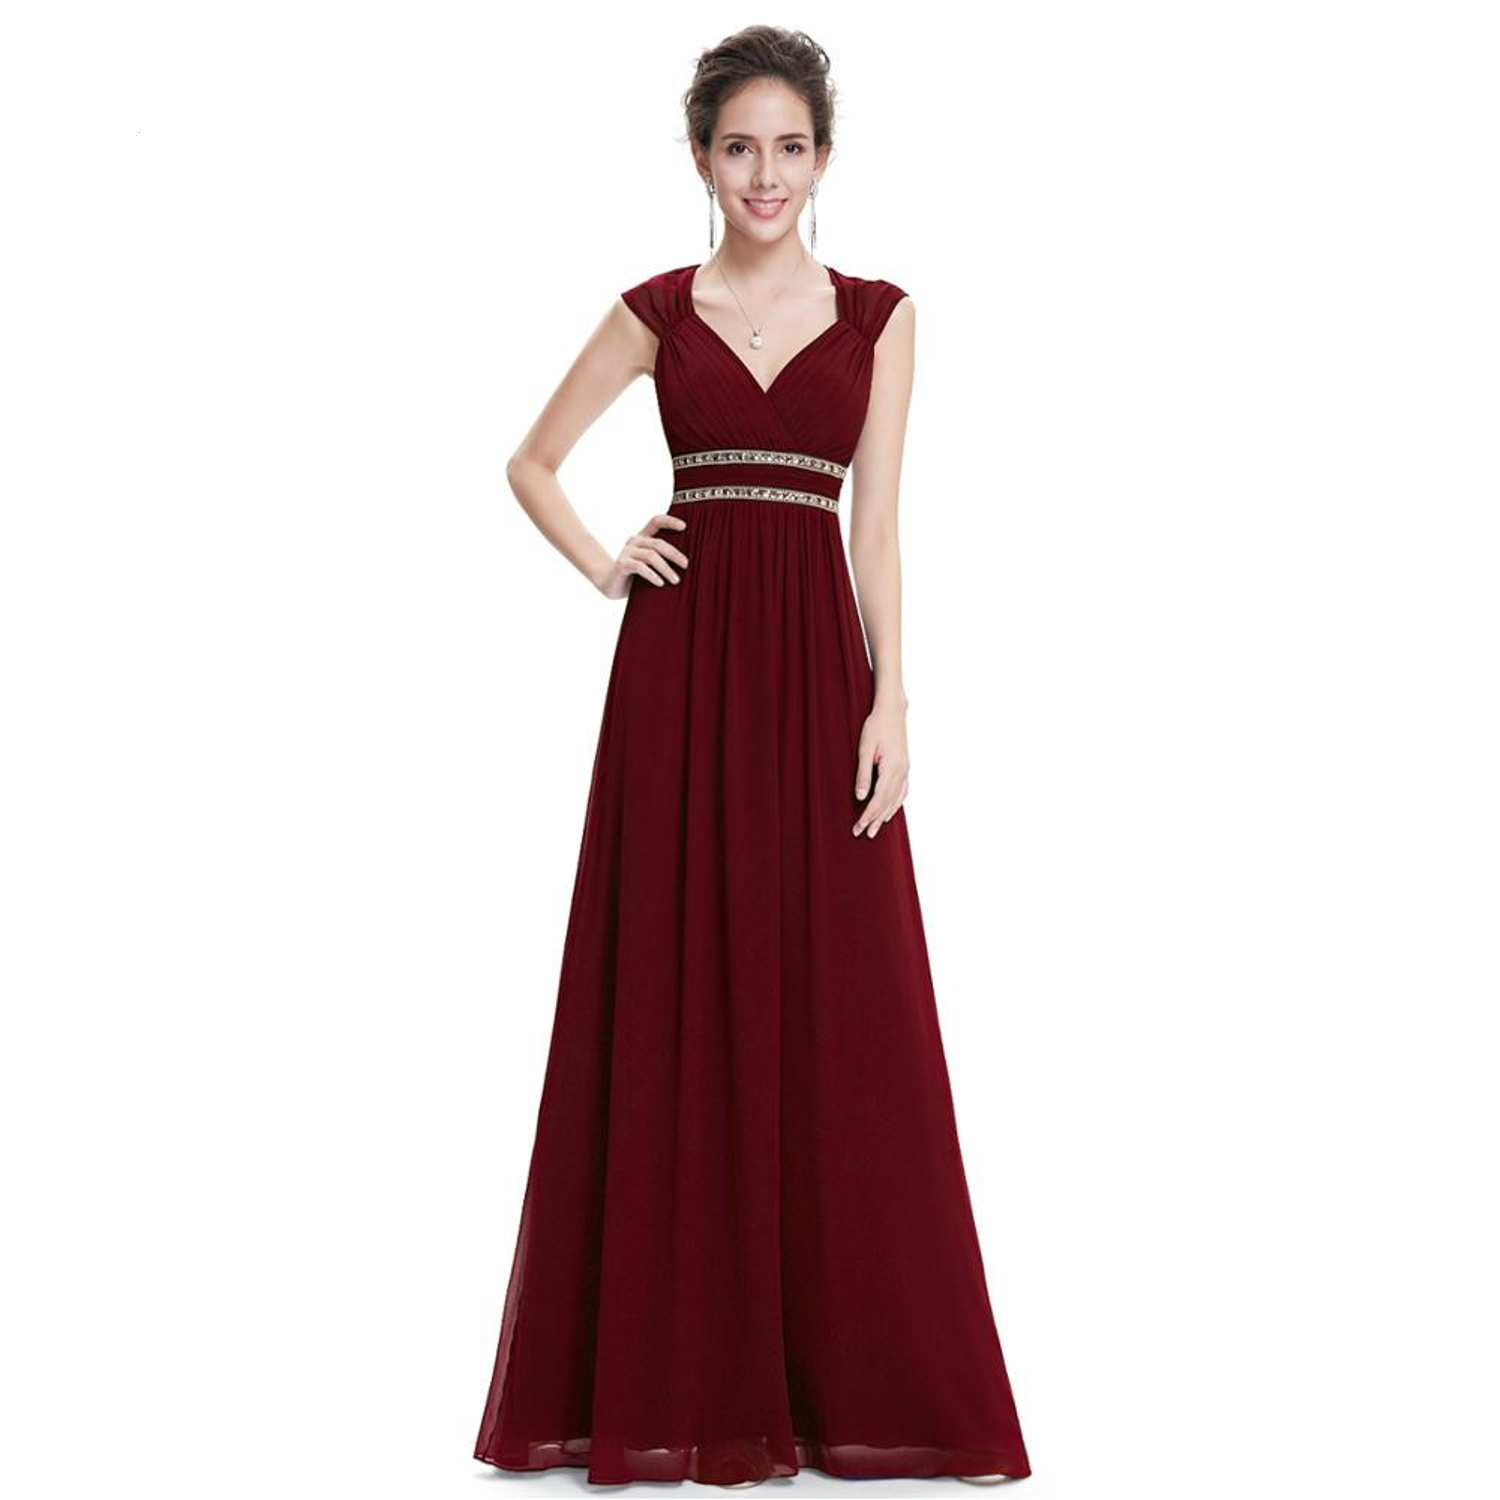 Greek style burgundy bridesmaid dress